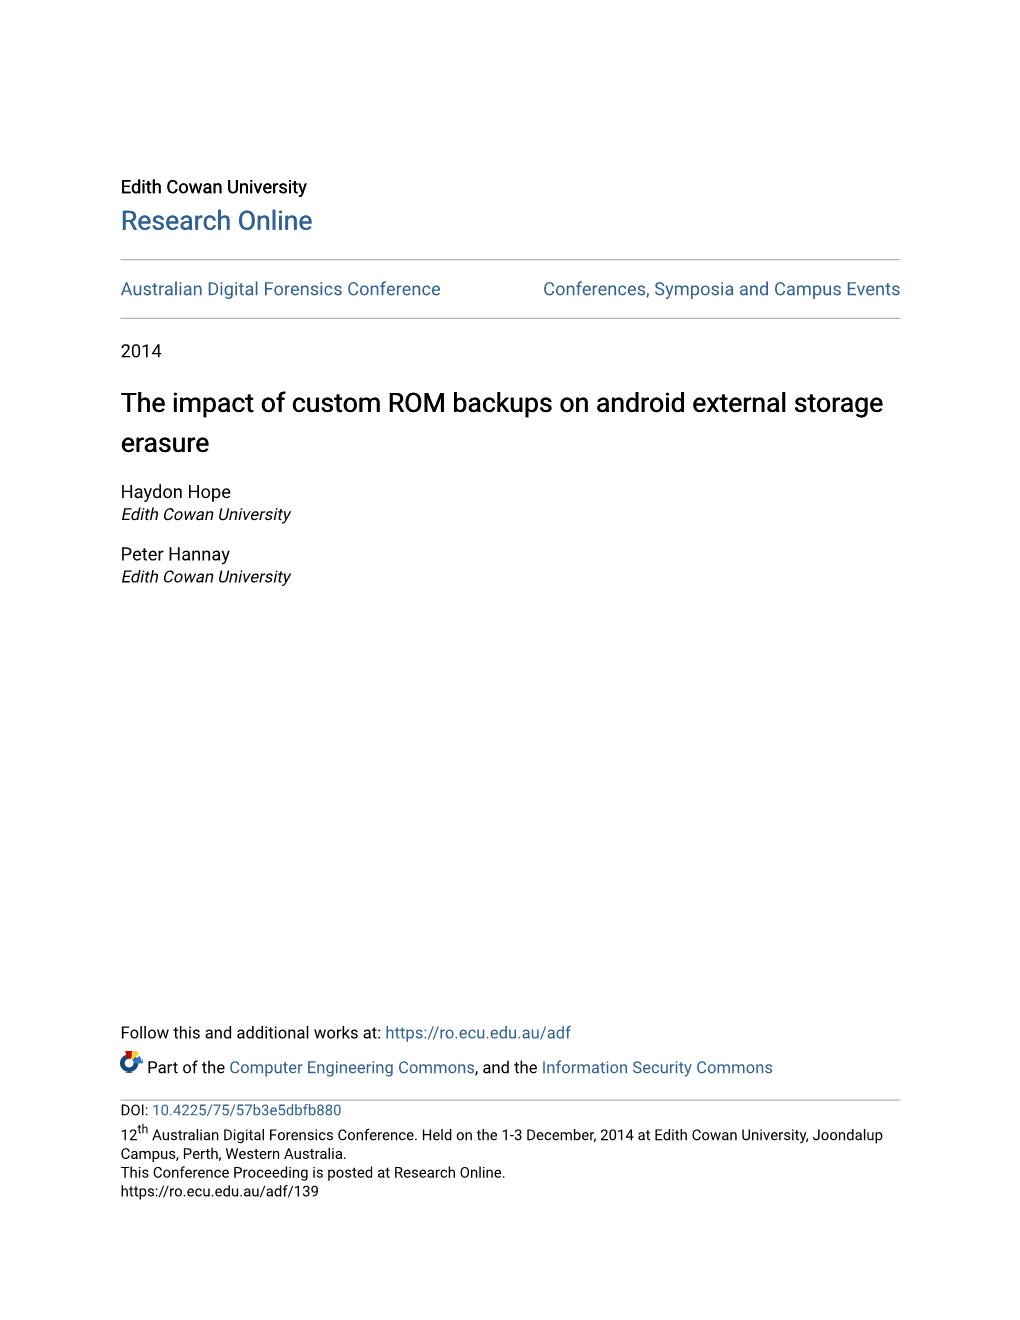 The Impact of Custom ROM Backups on Android External Storage Erasure